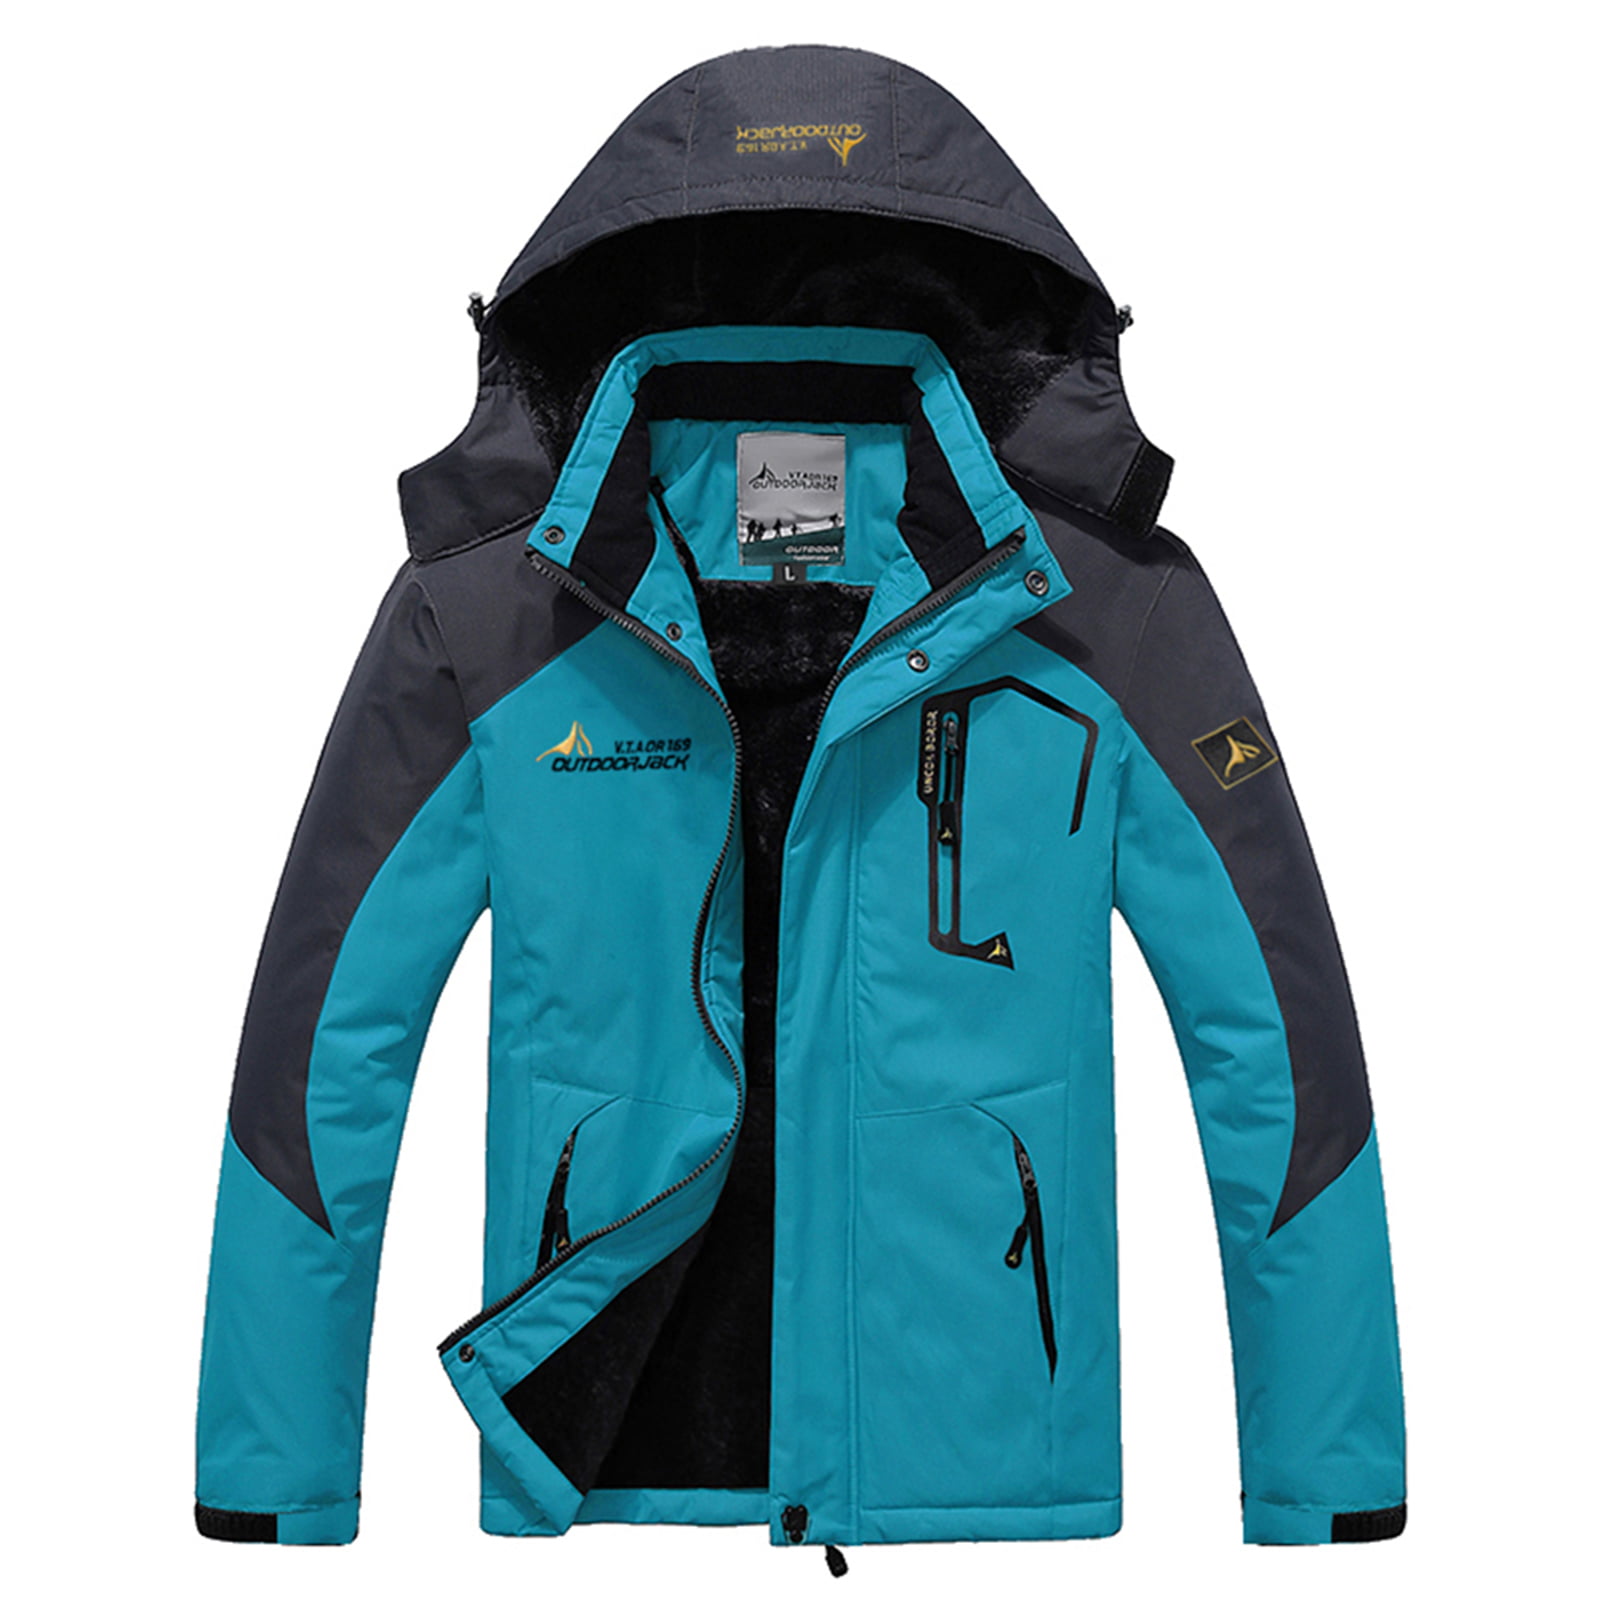 Details about   Ski Suit Men Windproof Waterproof Outdoor Sports Snow Jackets Ski Equipment 